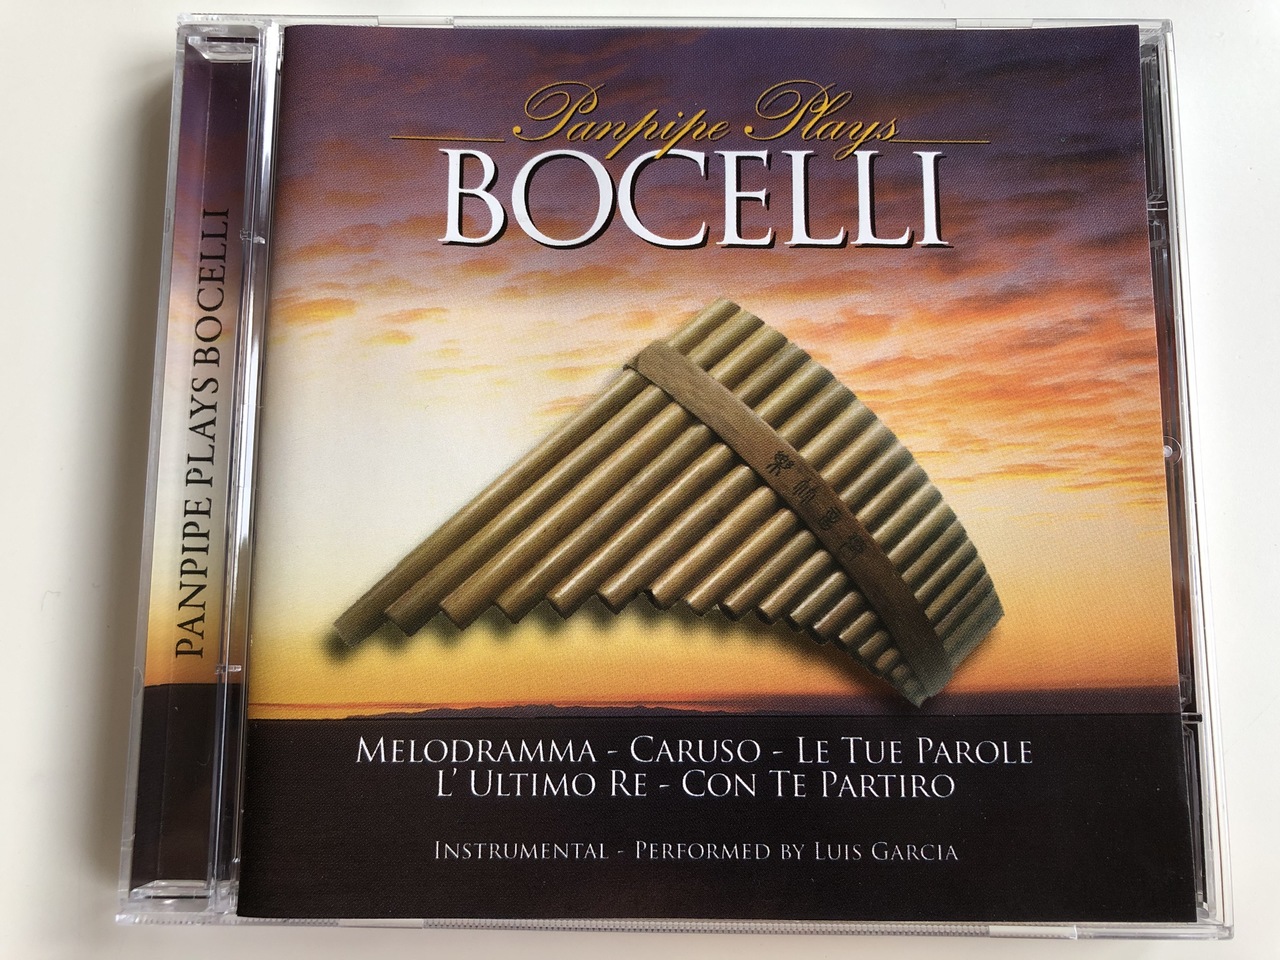 panpipe-plays-bocelli-melodramma-caruso-le-tue-parole-l-ultimo-re-con-te-partiro-instrumental-performed-by-luis-garcia-music-audio-cd-20262-1-66916.1572851002.1280.1280.jpg